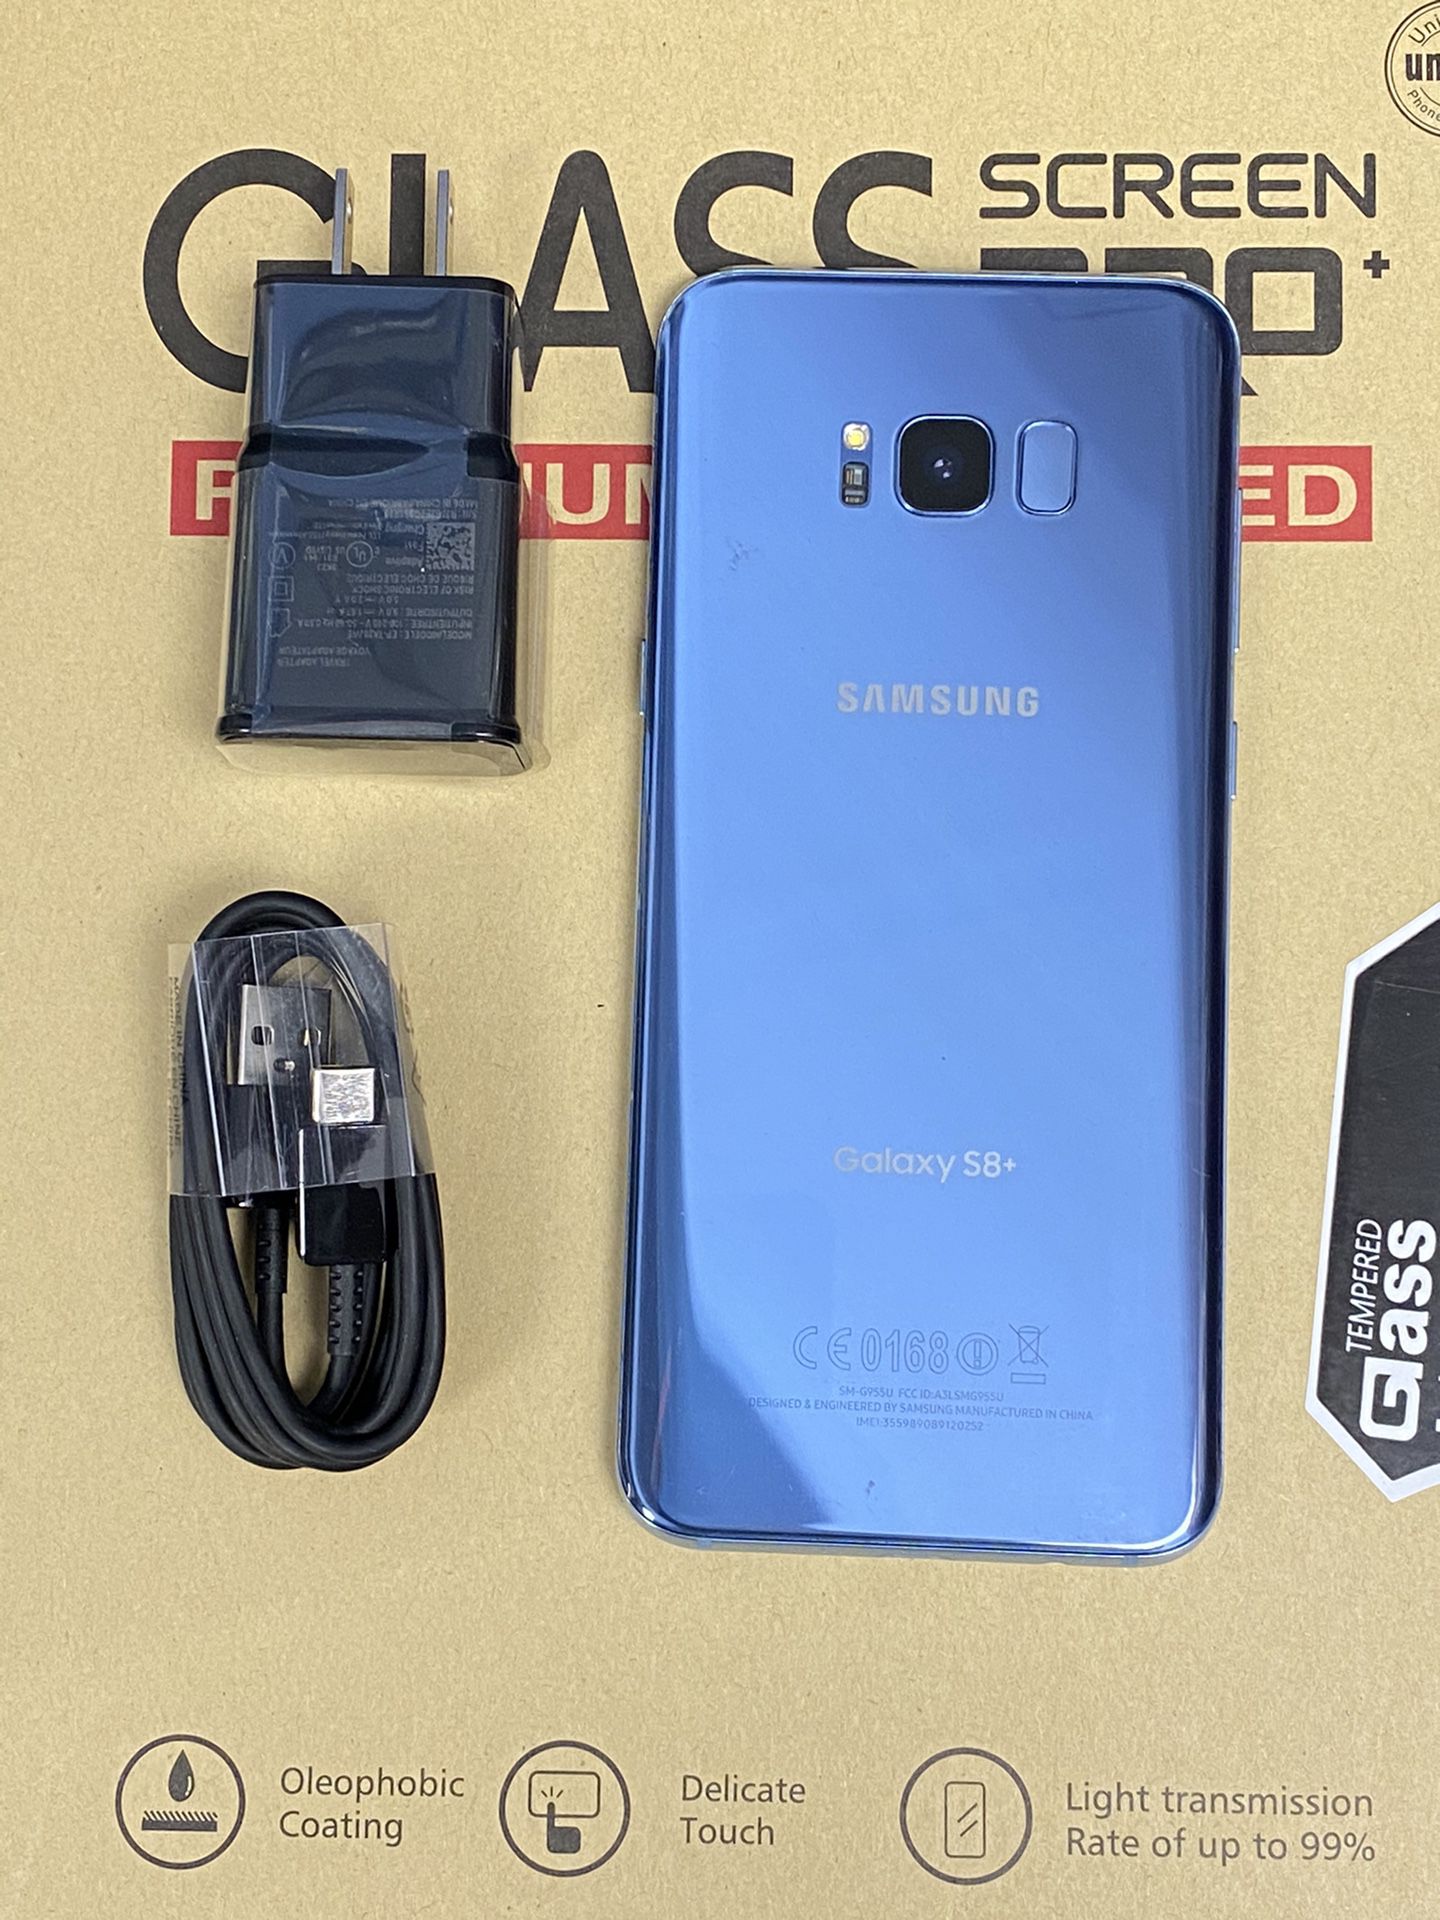 Samsung galaxy s8 plus unlocked